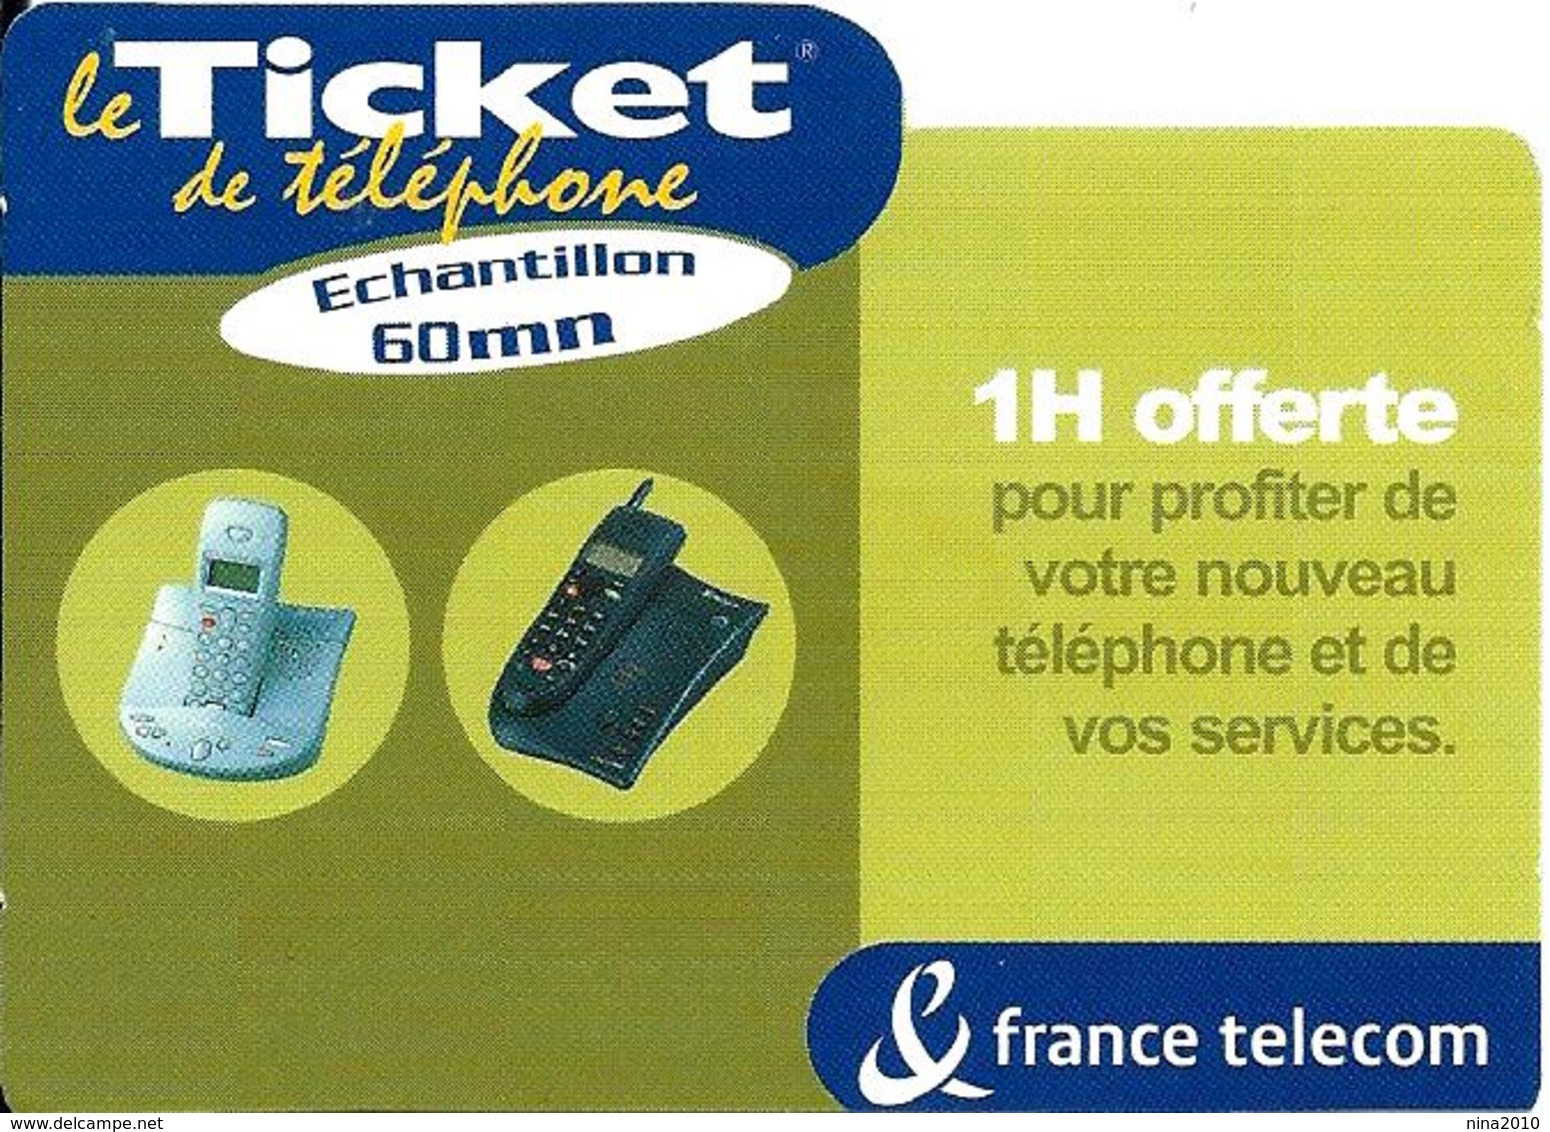 Ticket De Téléphone Privé - 1 H Offerte - 60 000 Ex. (luxe) - 15/11/2002 - Biglietti FT